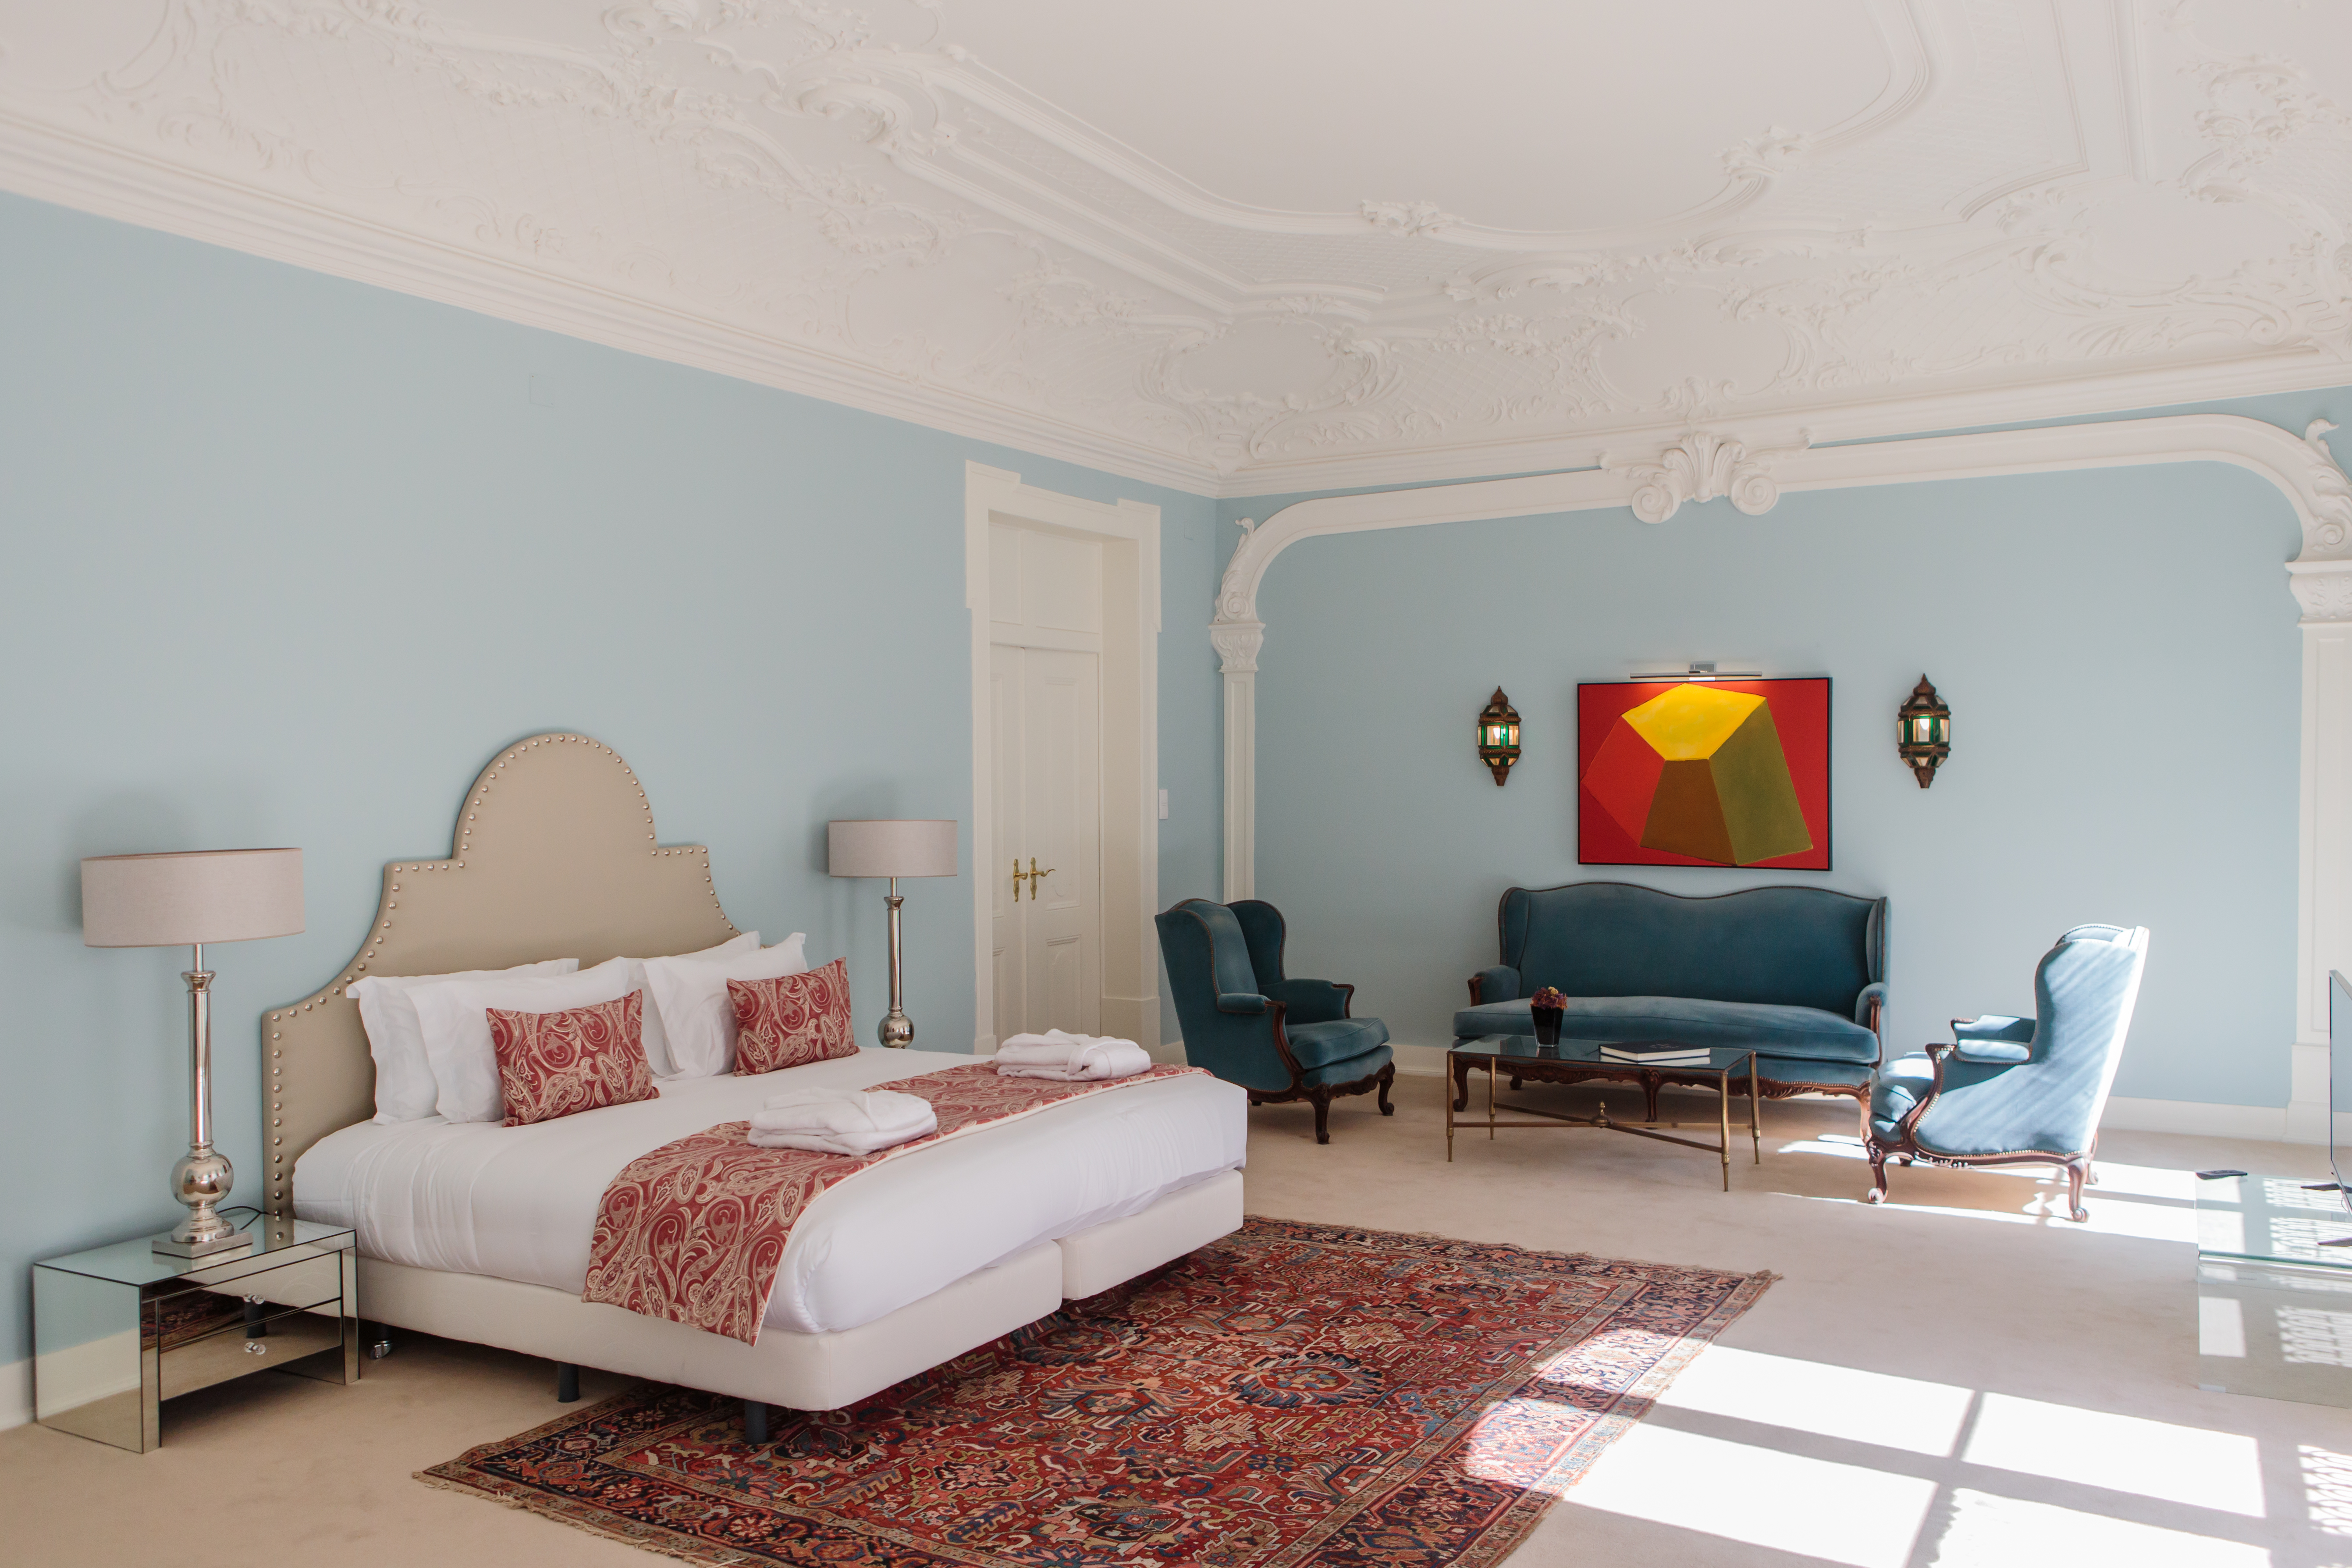 Best Places to Stay in Lisbon - Dear Lisbon Palace in Chiado